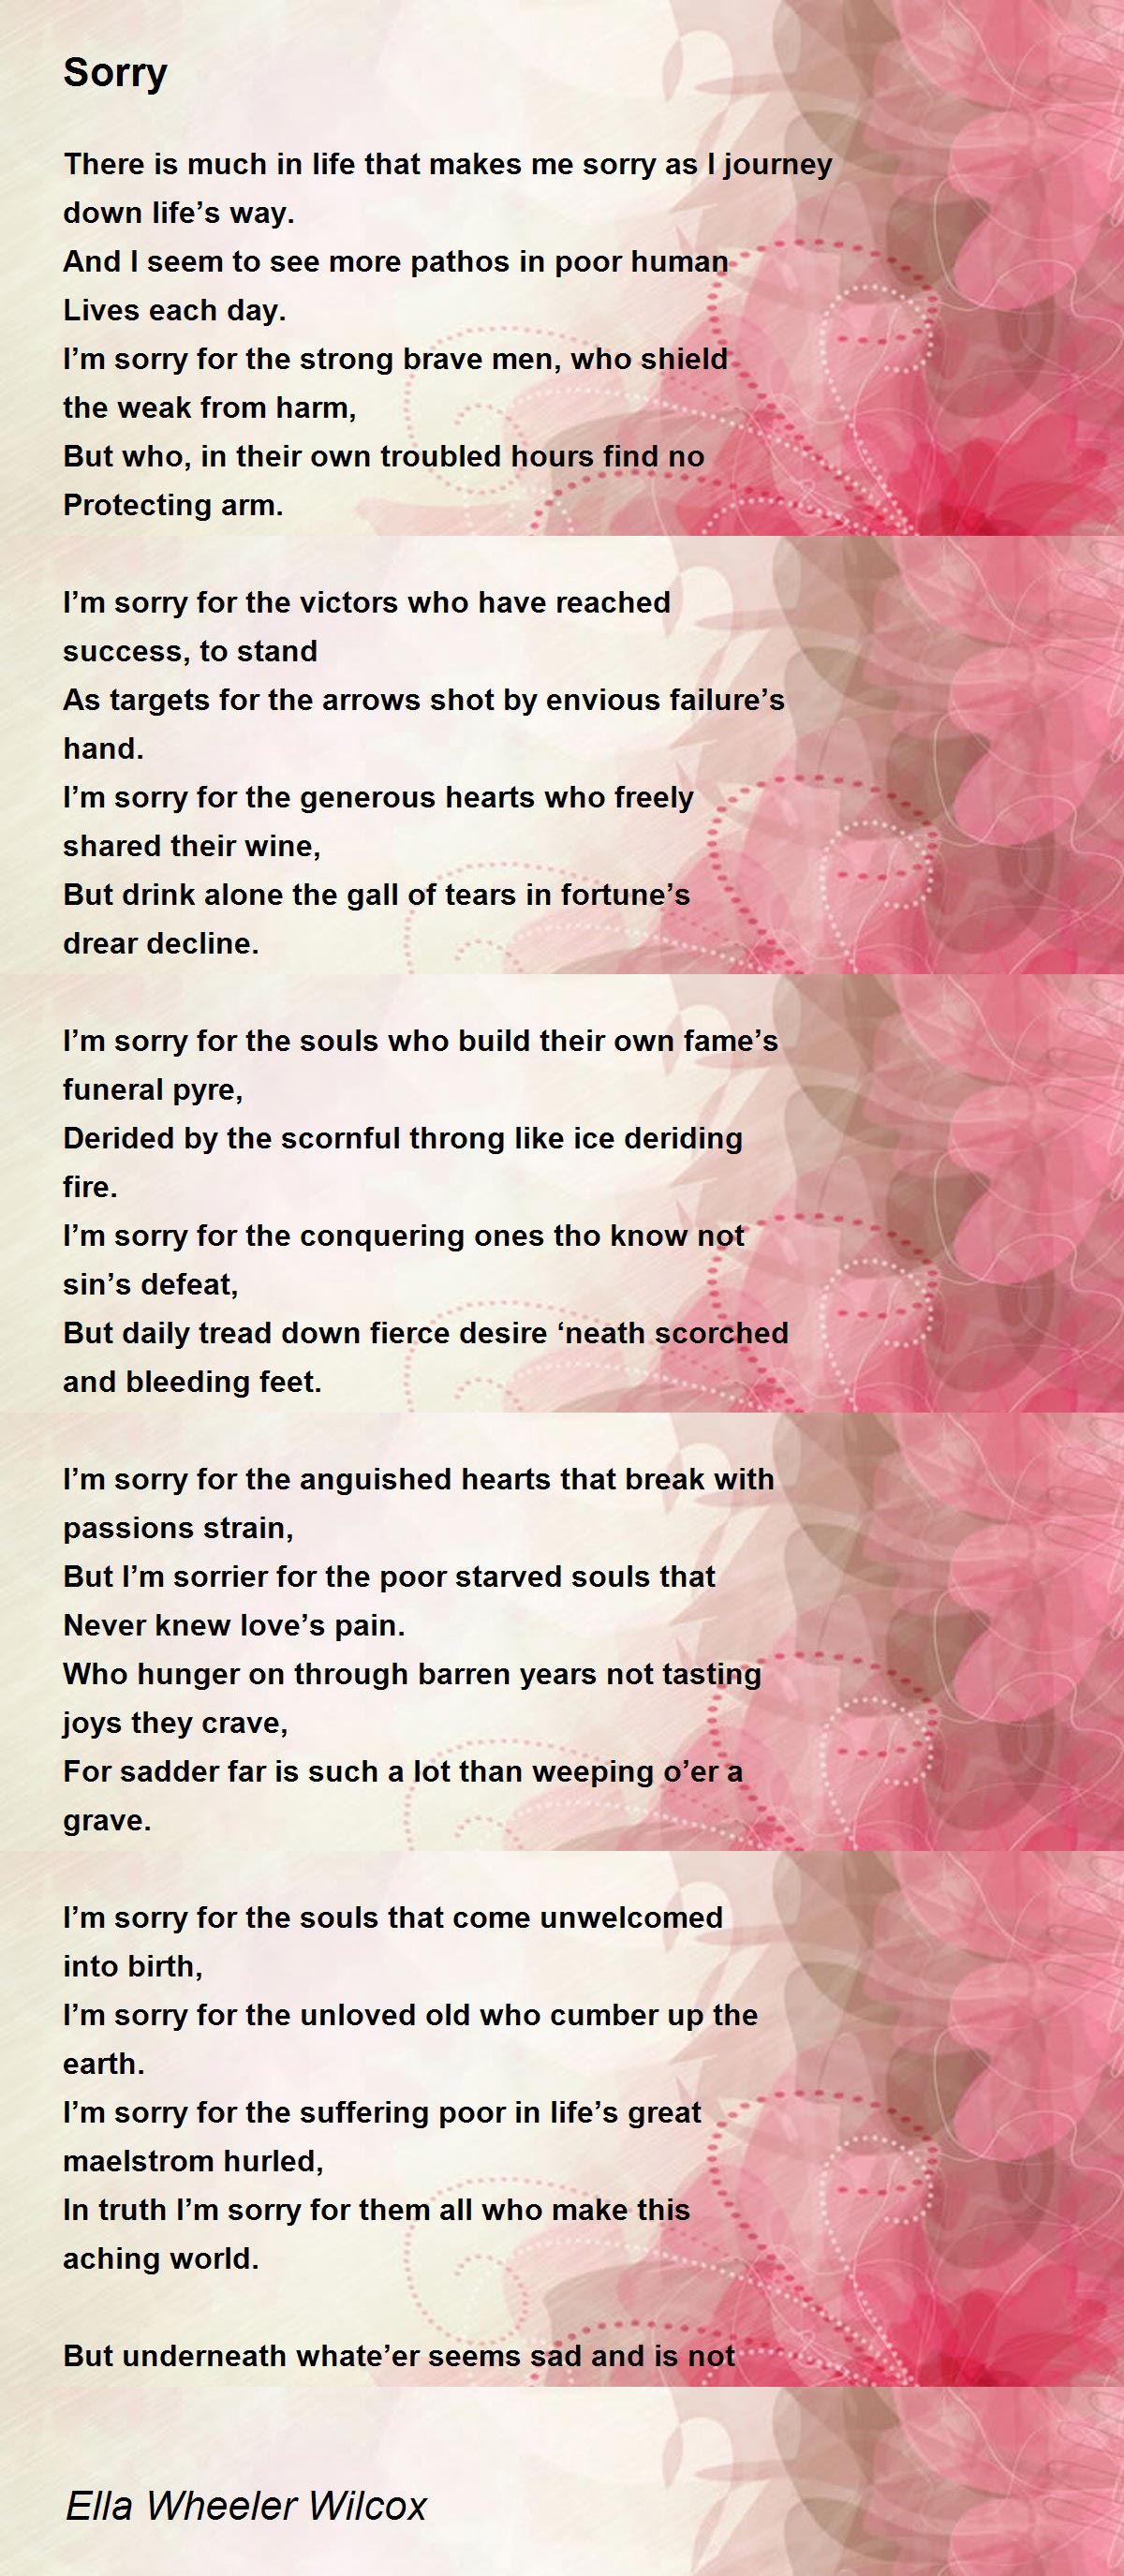 Sorry - Sorry Poem by Ella Wheeler Wilcox